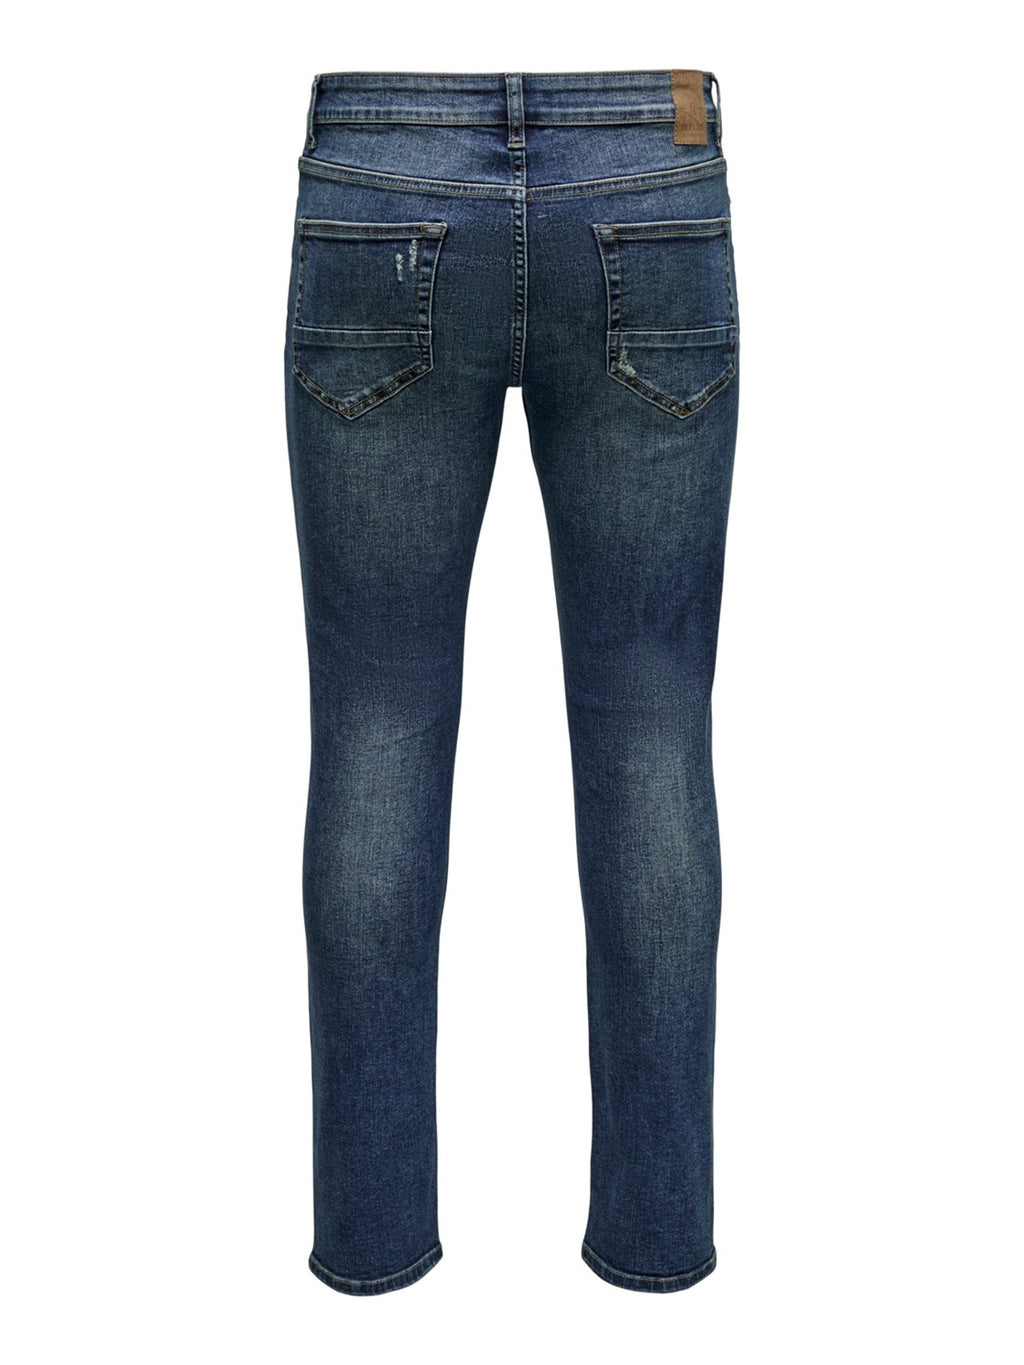 Loom Slim 2946 Jeans - Blue Denim